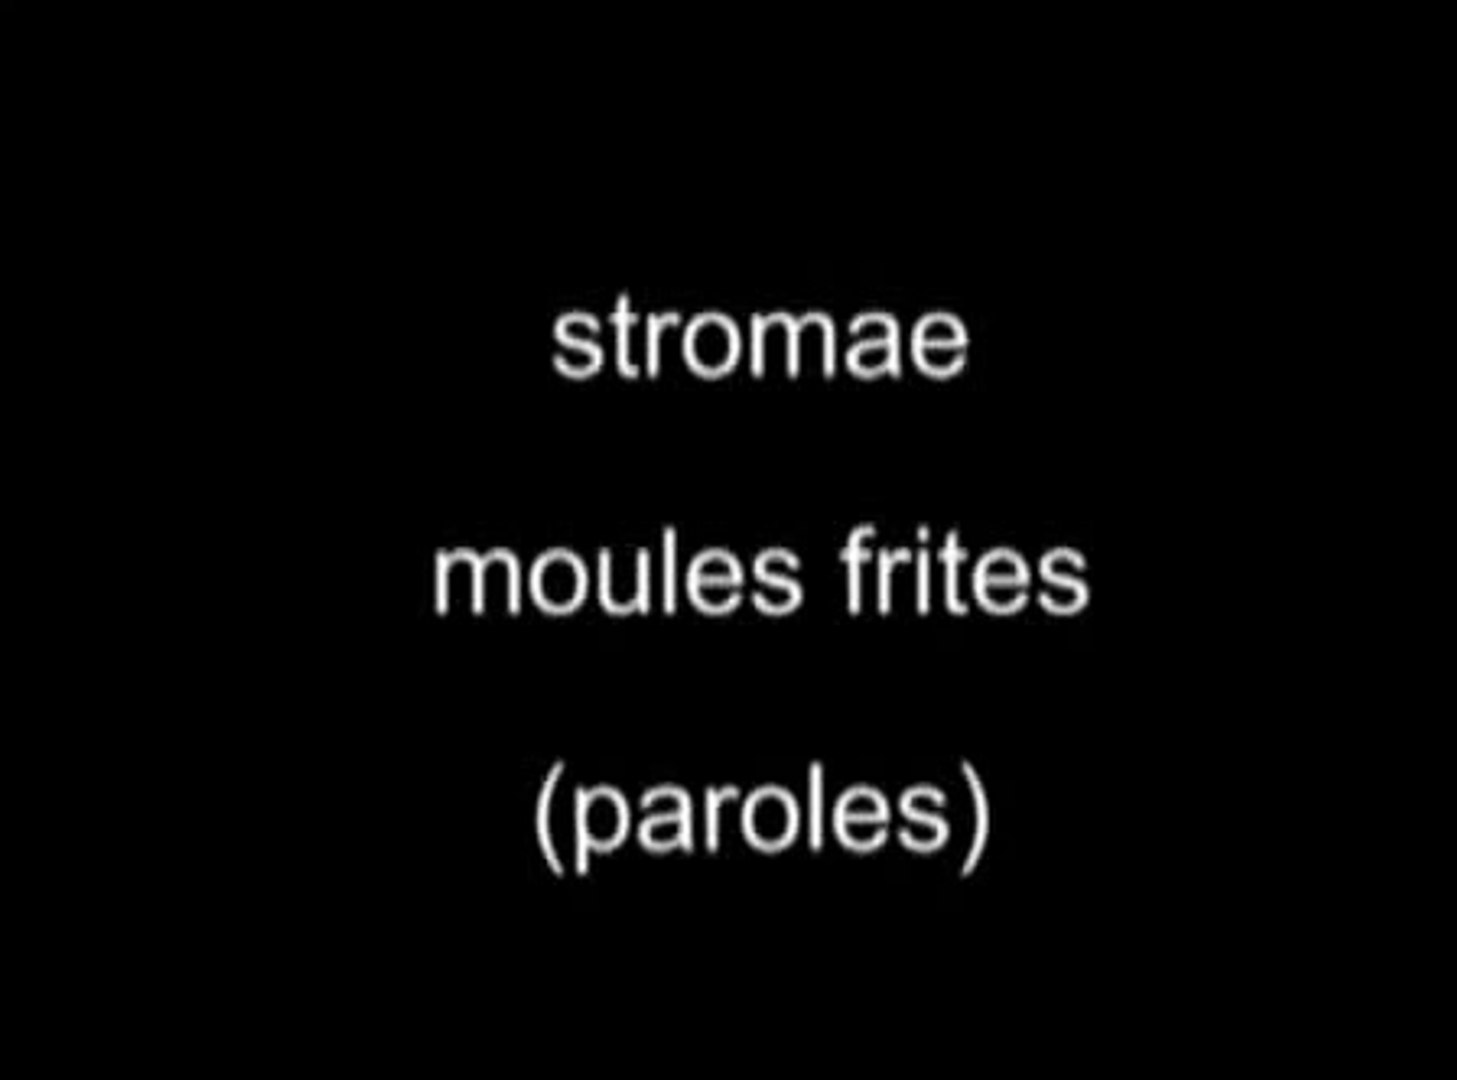 Stromae-moules frites (lyrics paroles) - Vidéo Dailymotion